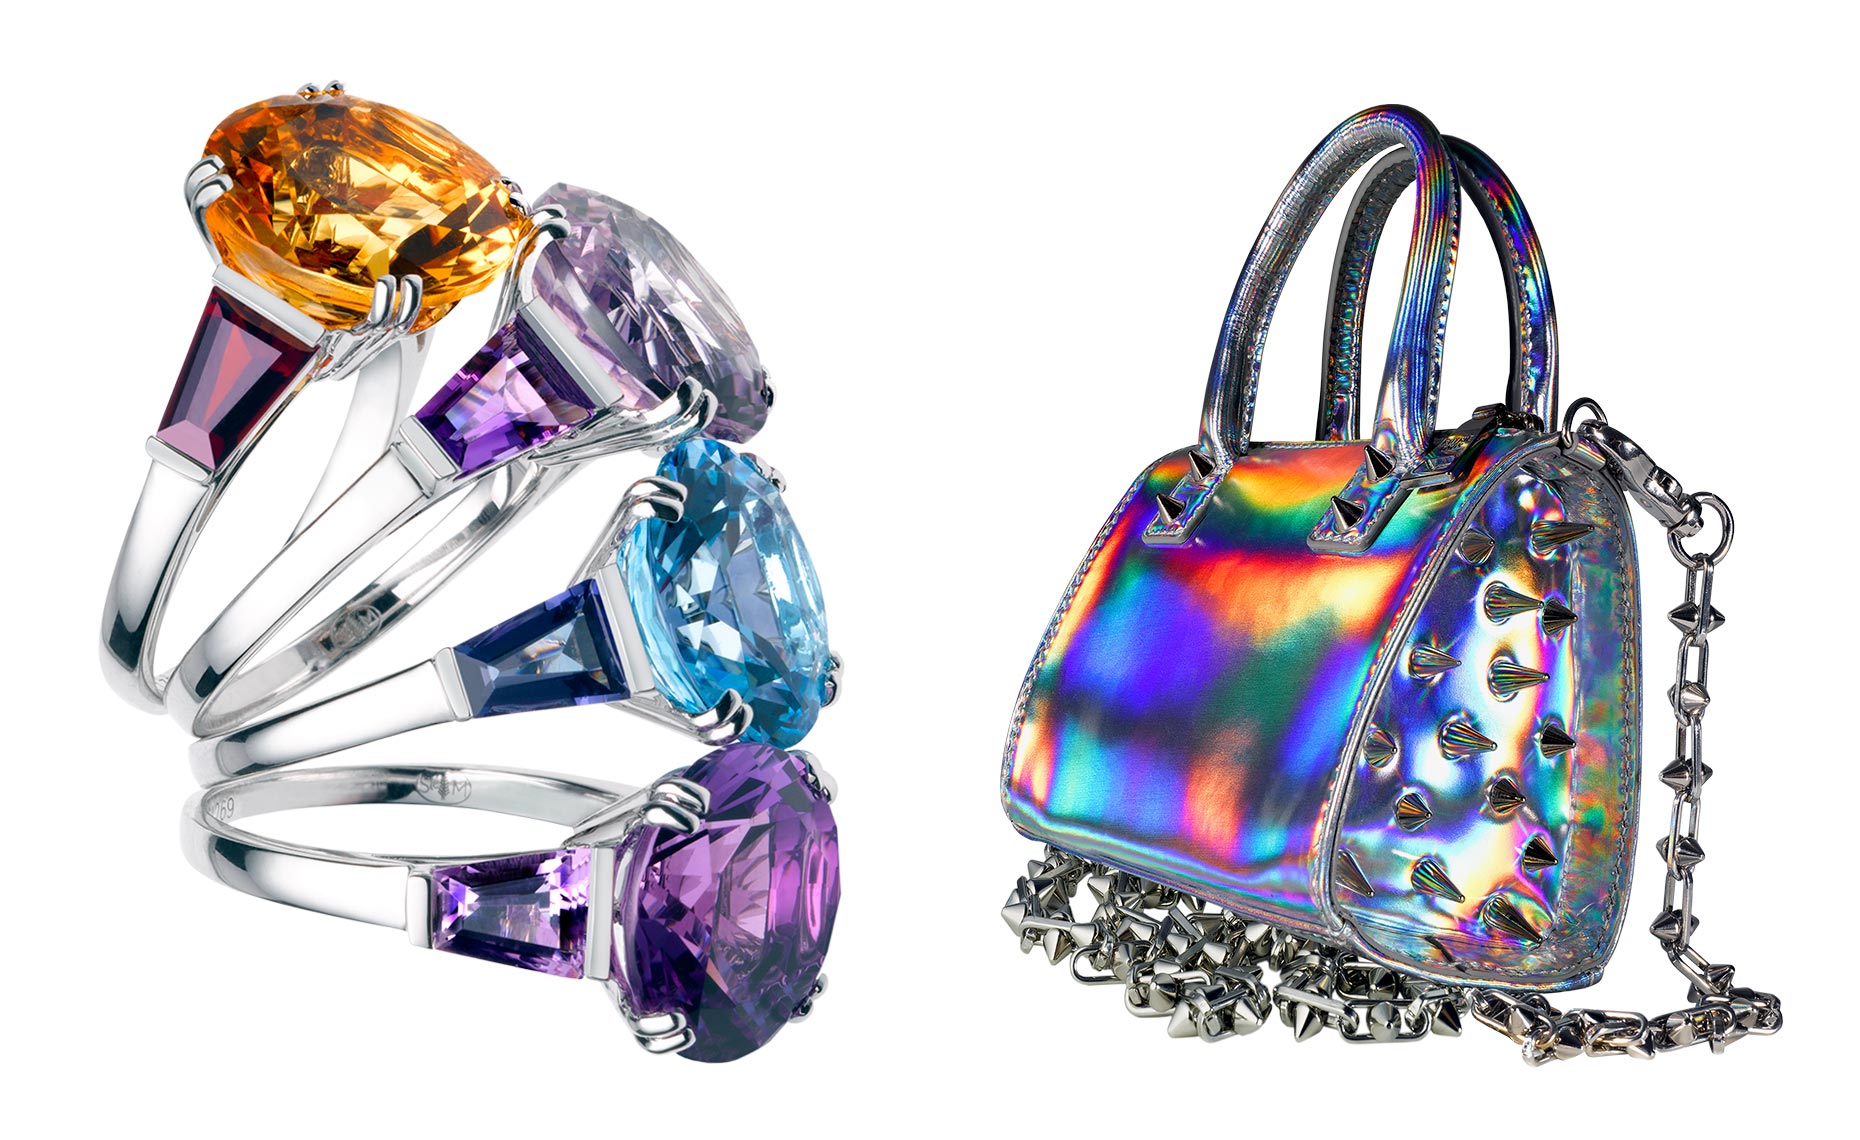 Semi-precious stone rings and Ruthie Davis studded handbag